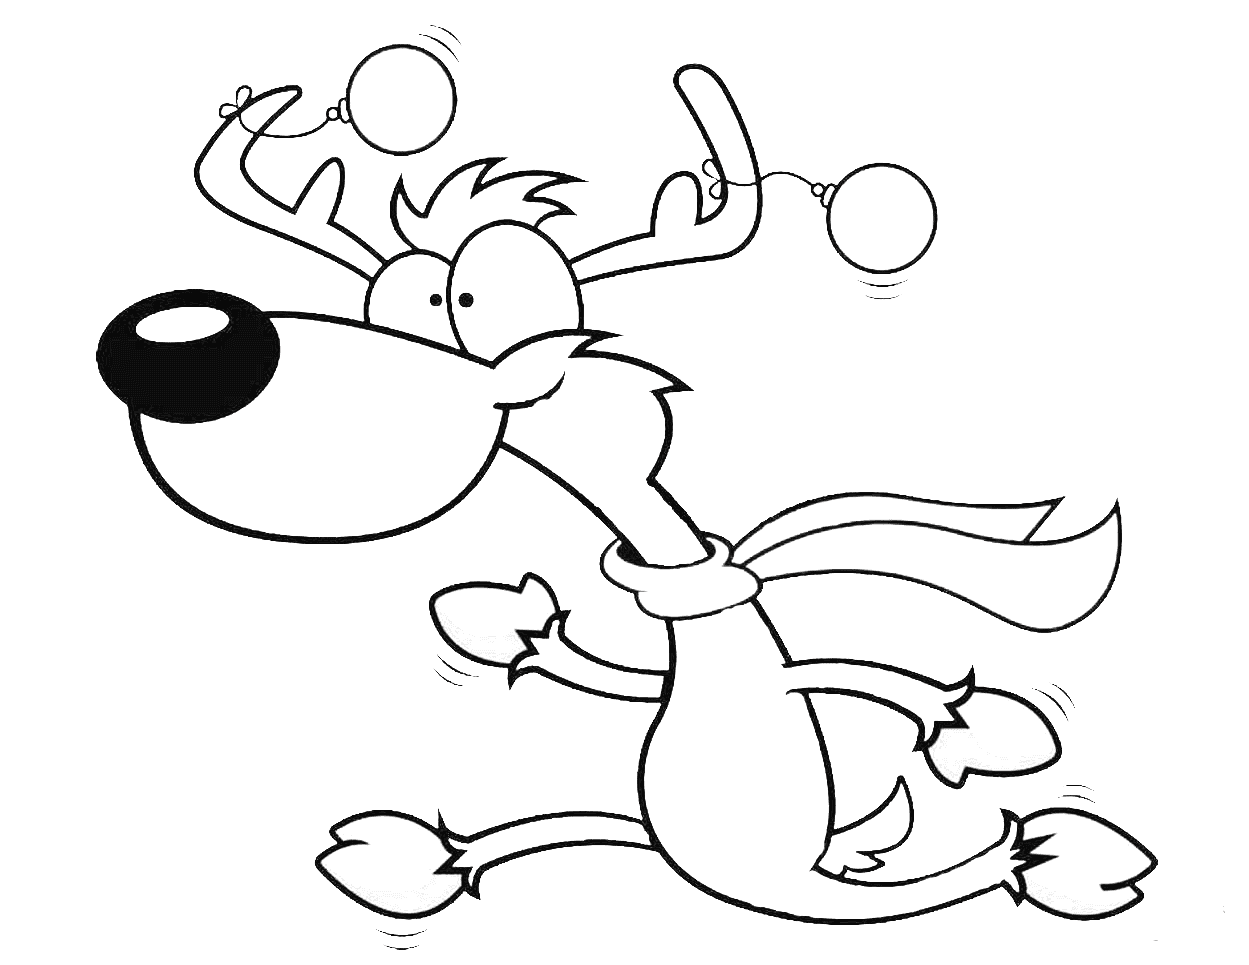 Cartoon Reindeer Running Image For Kids Coloring Page